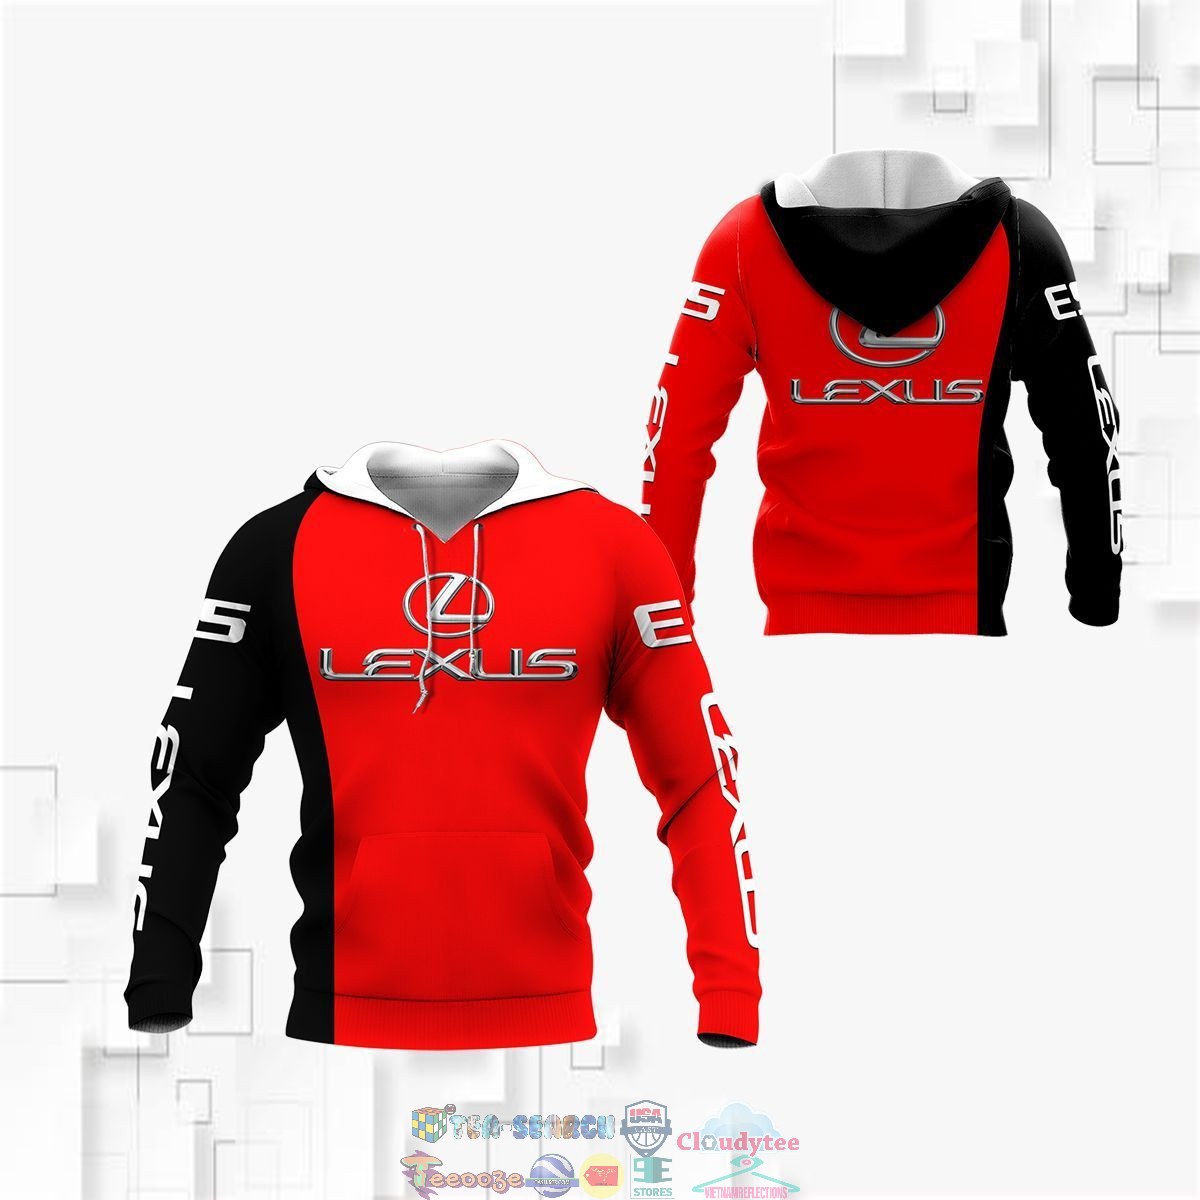 Lexus ver 6 3D hoodie and t-shirt